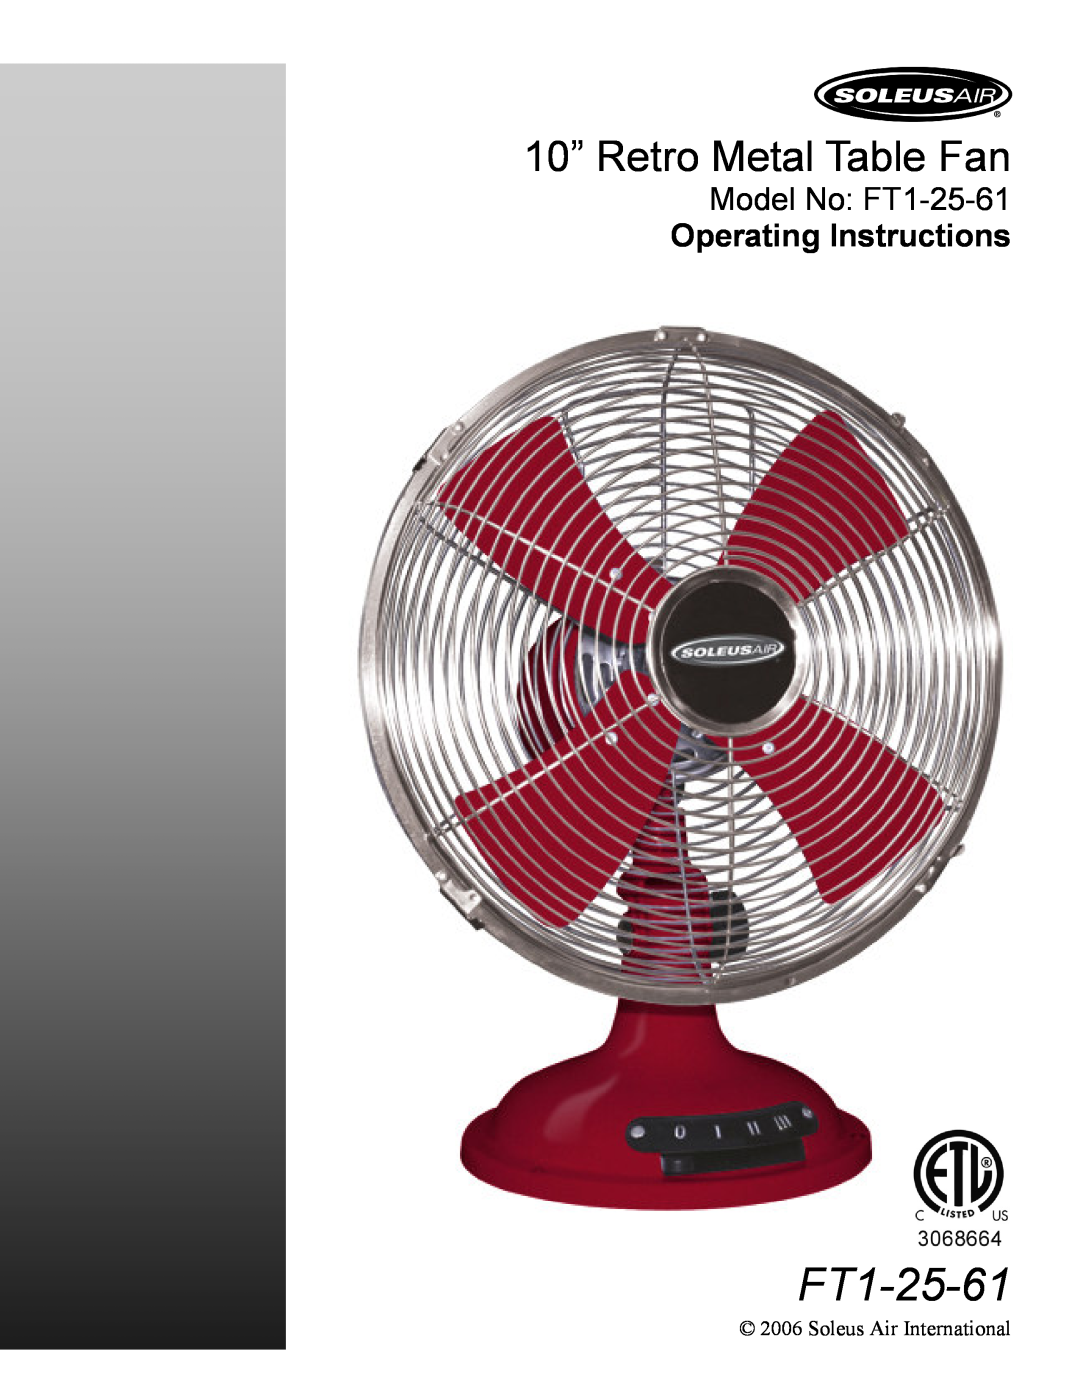 Soleus Air manual 10” Retro Metal Table Fan, Model No FT1-25-61 Operating Instructions 